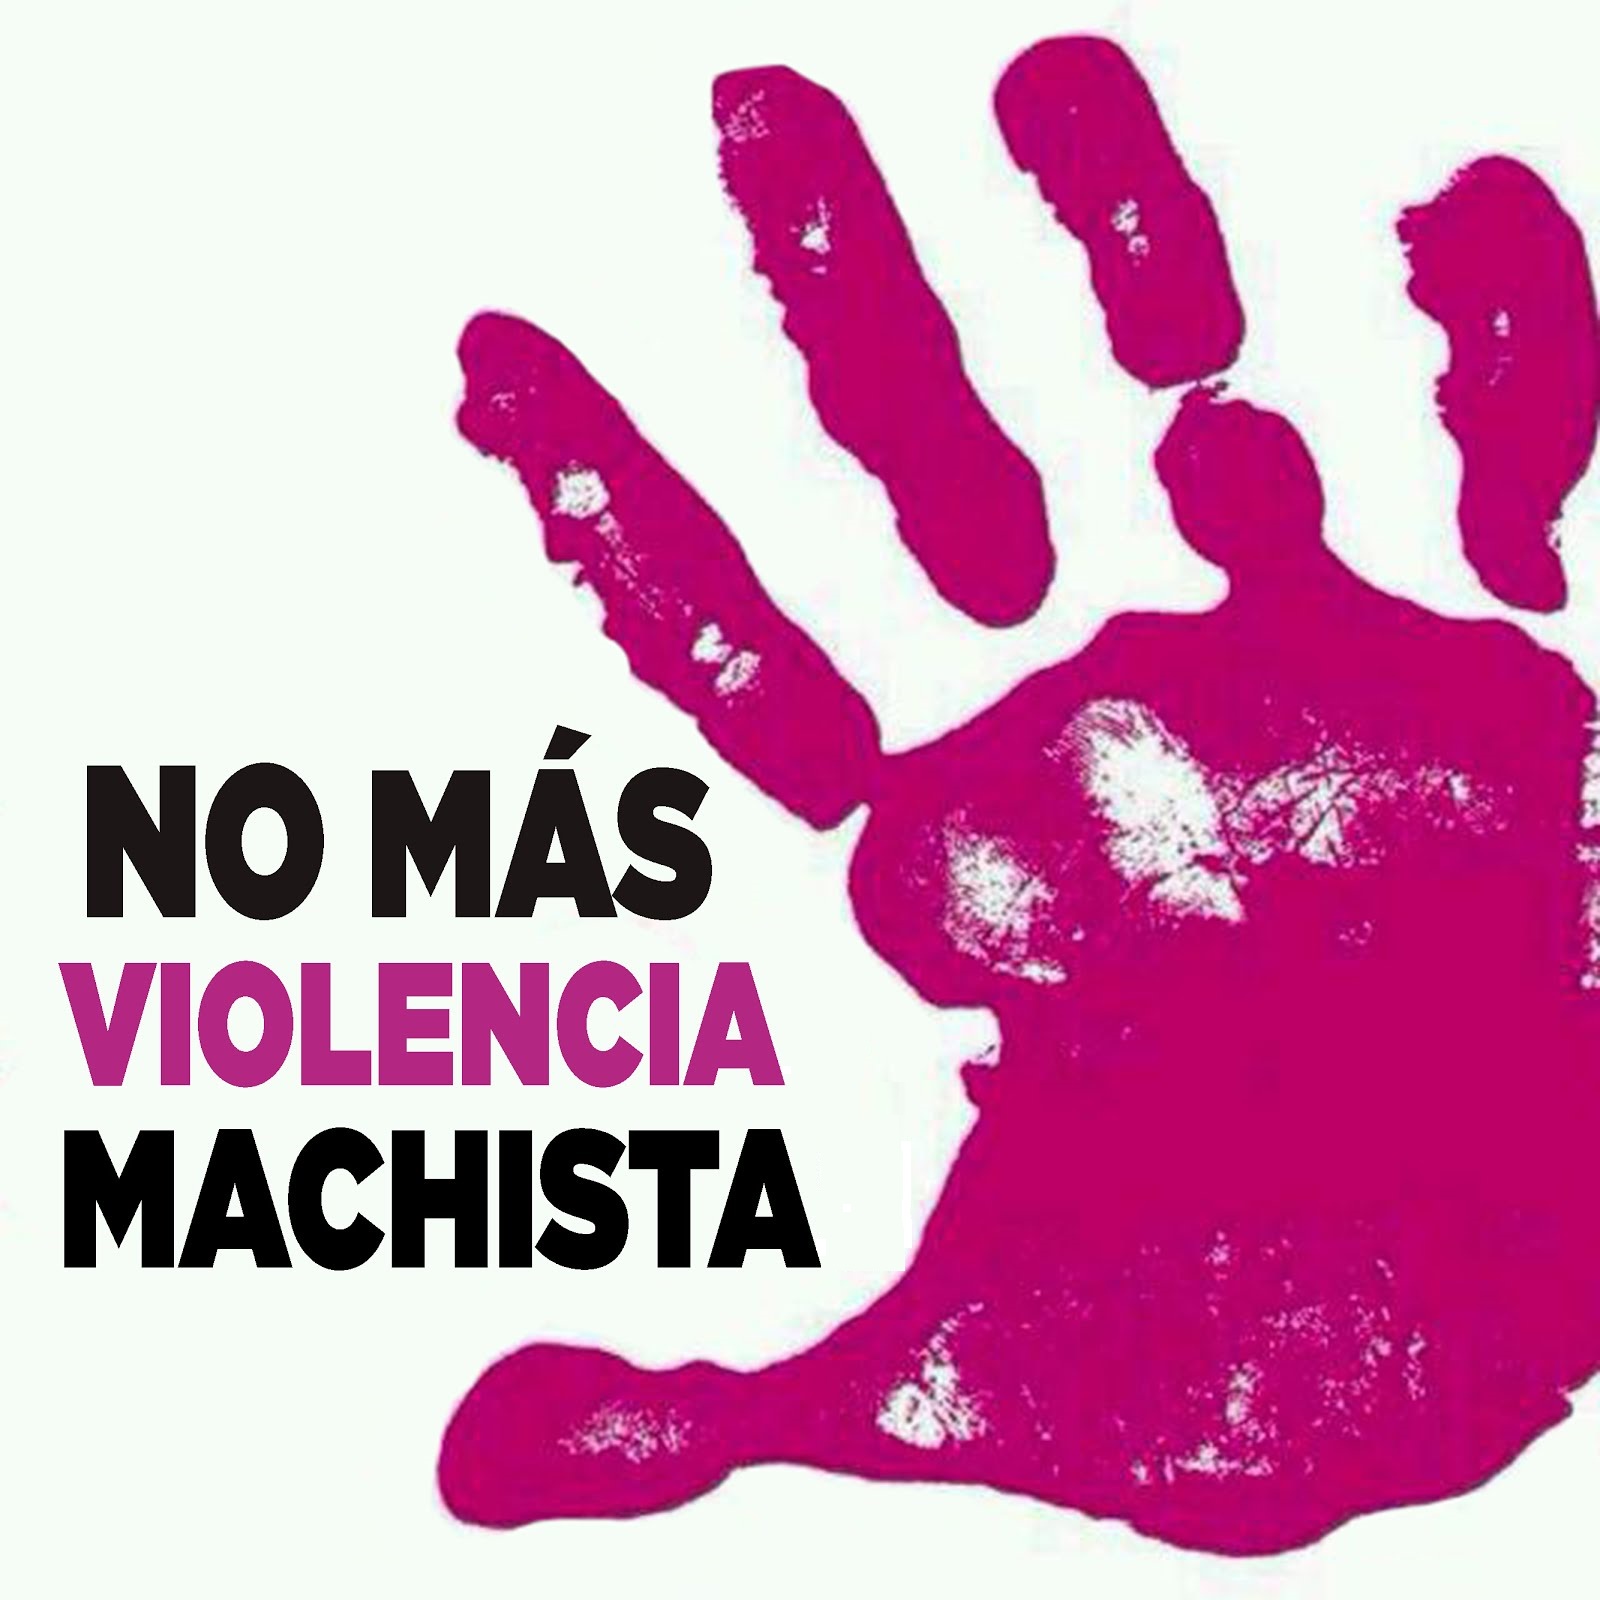 No te calles, llama al 016 #STOPmachismo